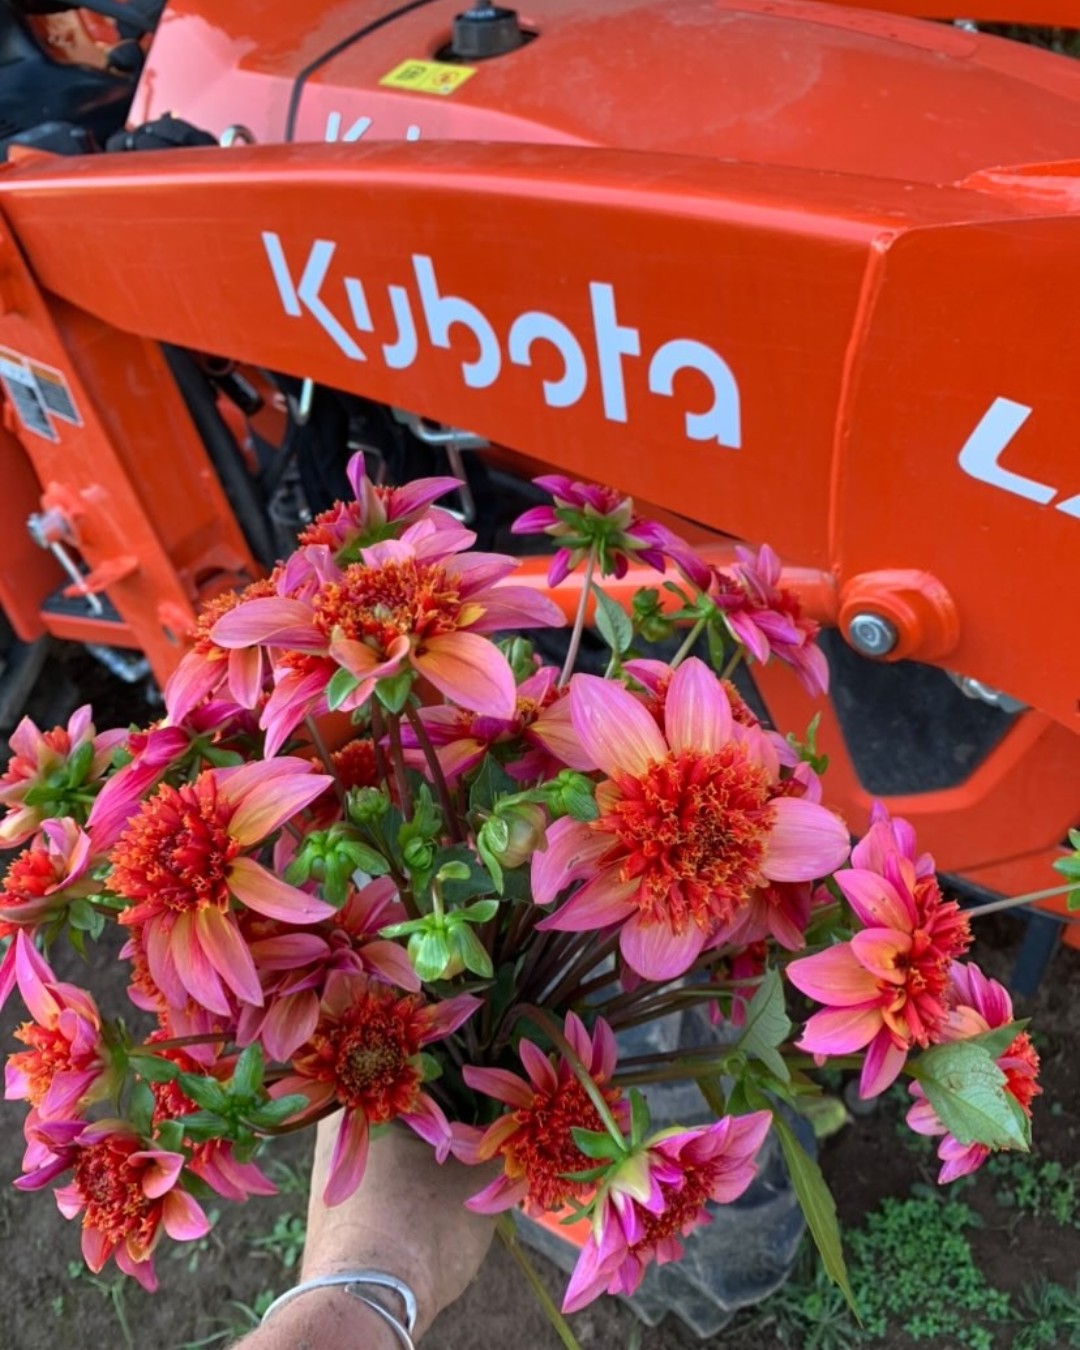 Kubota Tractor Corporation (@kubota_usa) / X